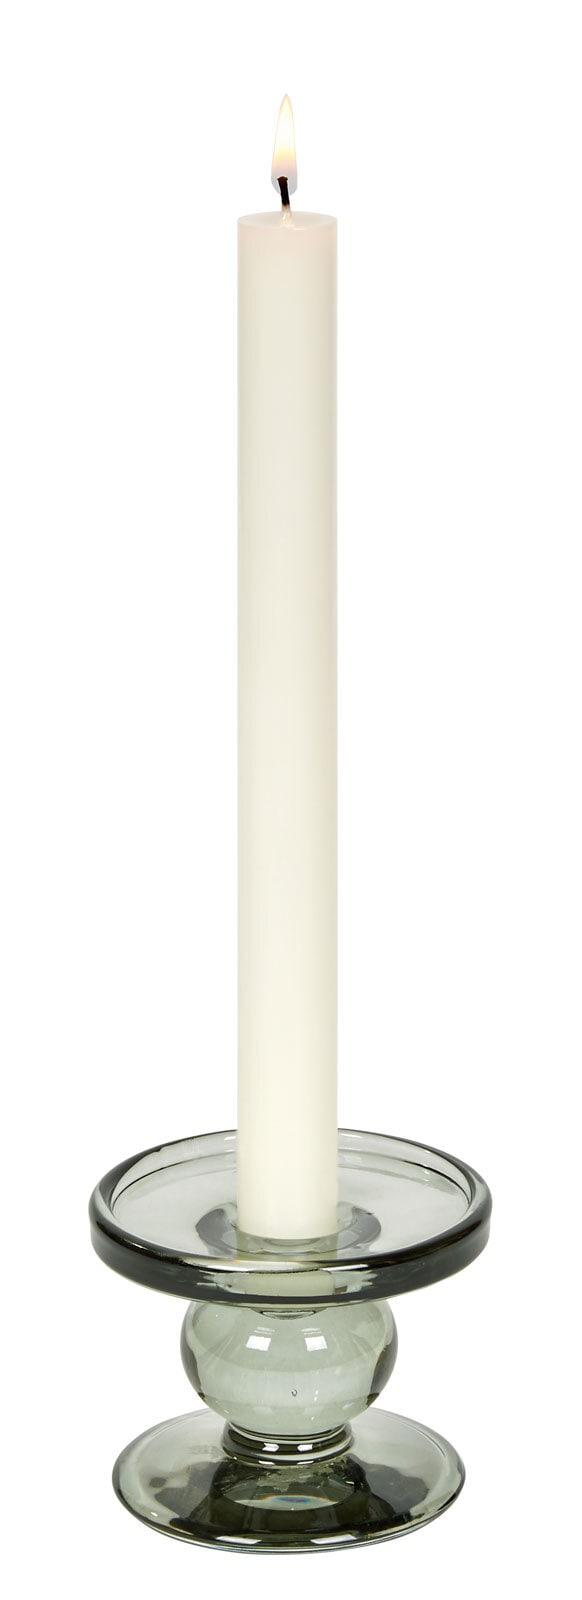 LAMBERT Kerzenständer ANDRATX 7 cm rauchgrau